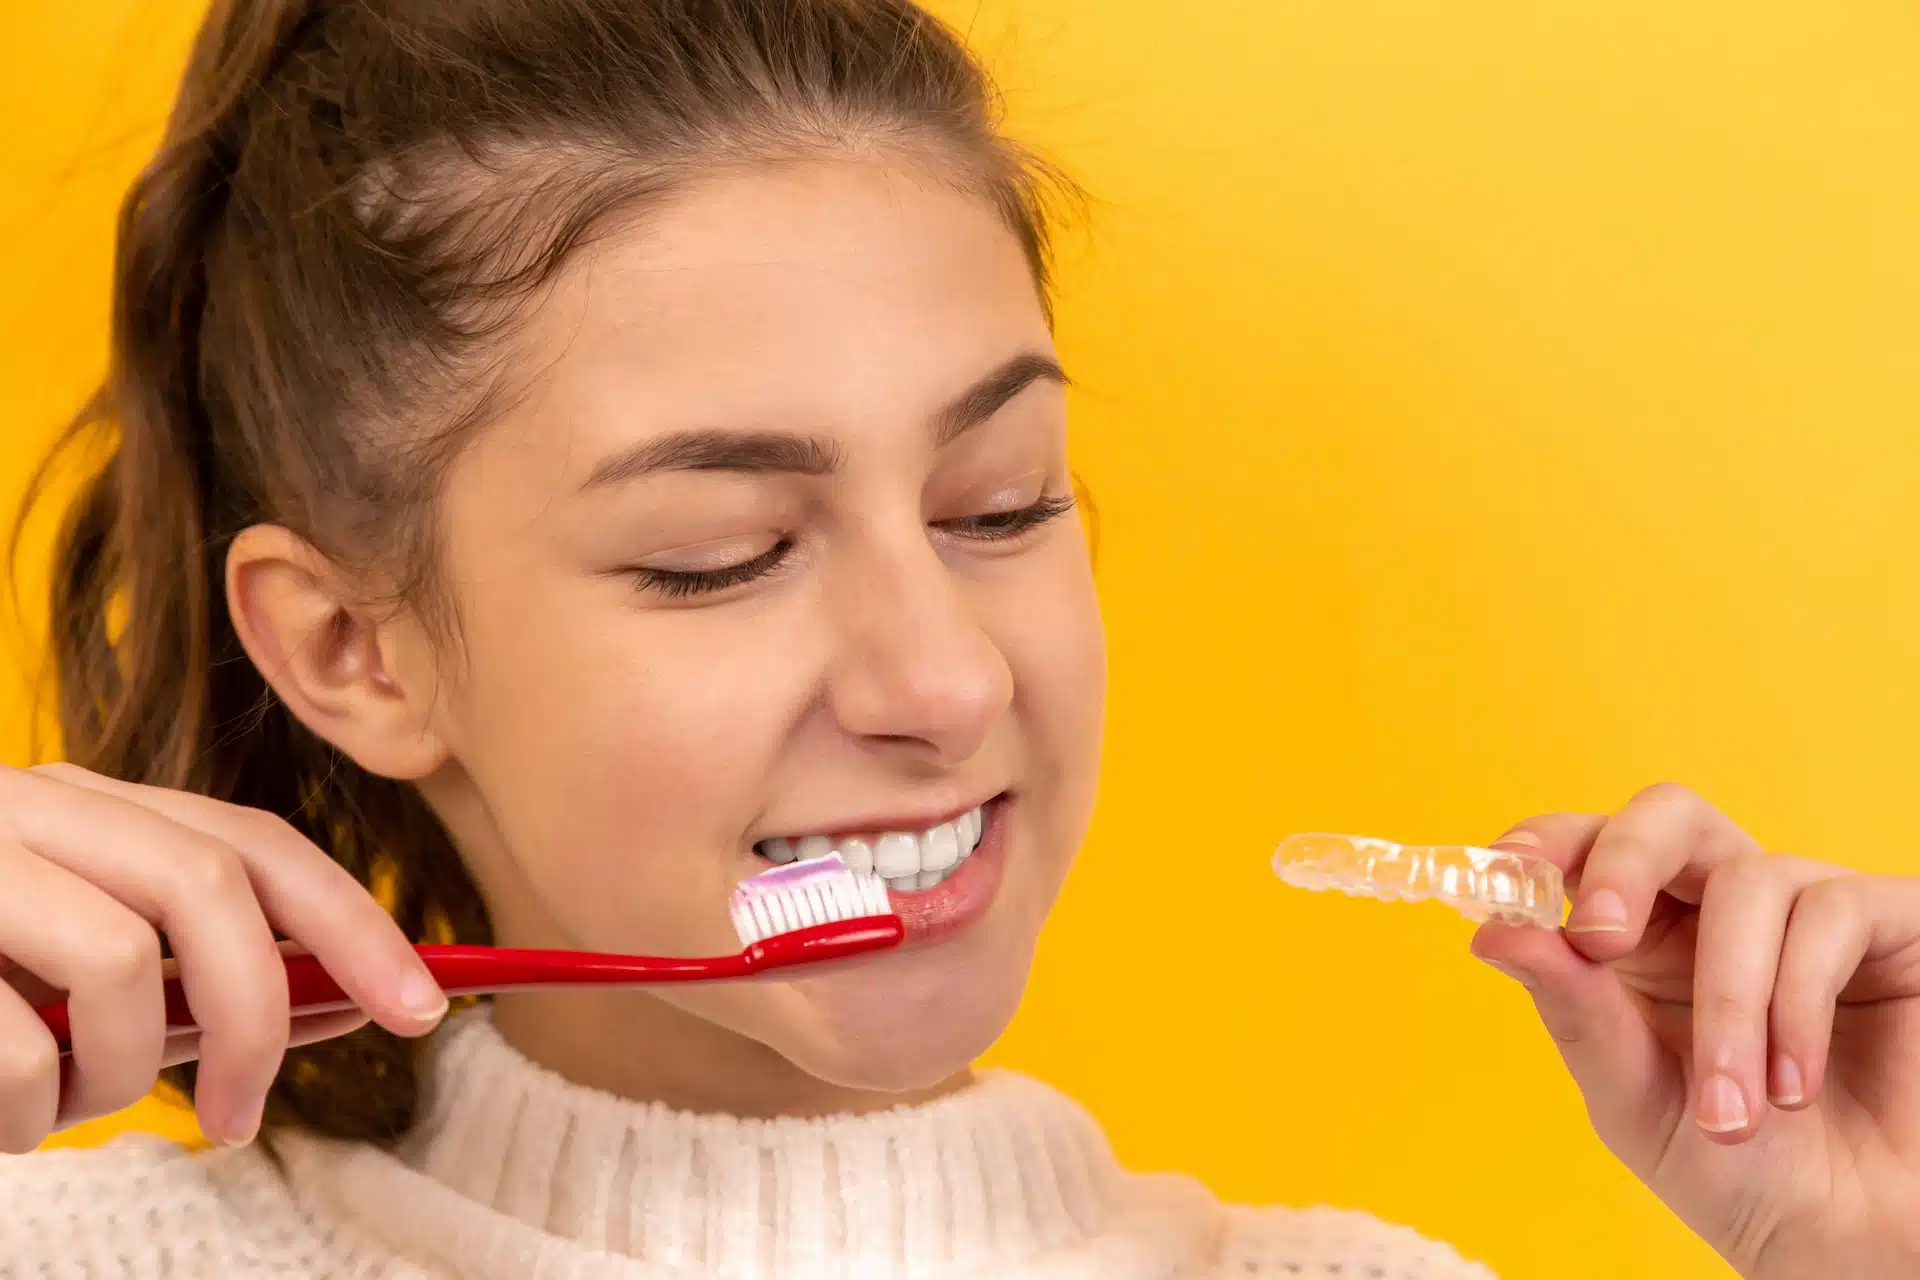 Brushing Your Teeth